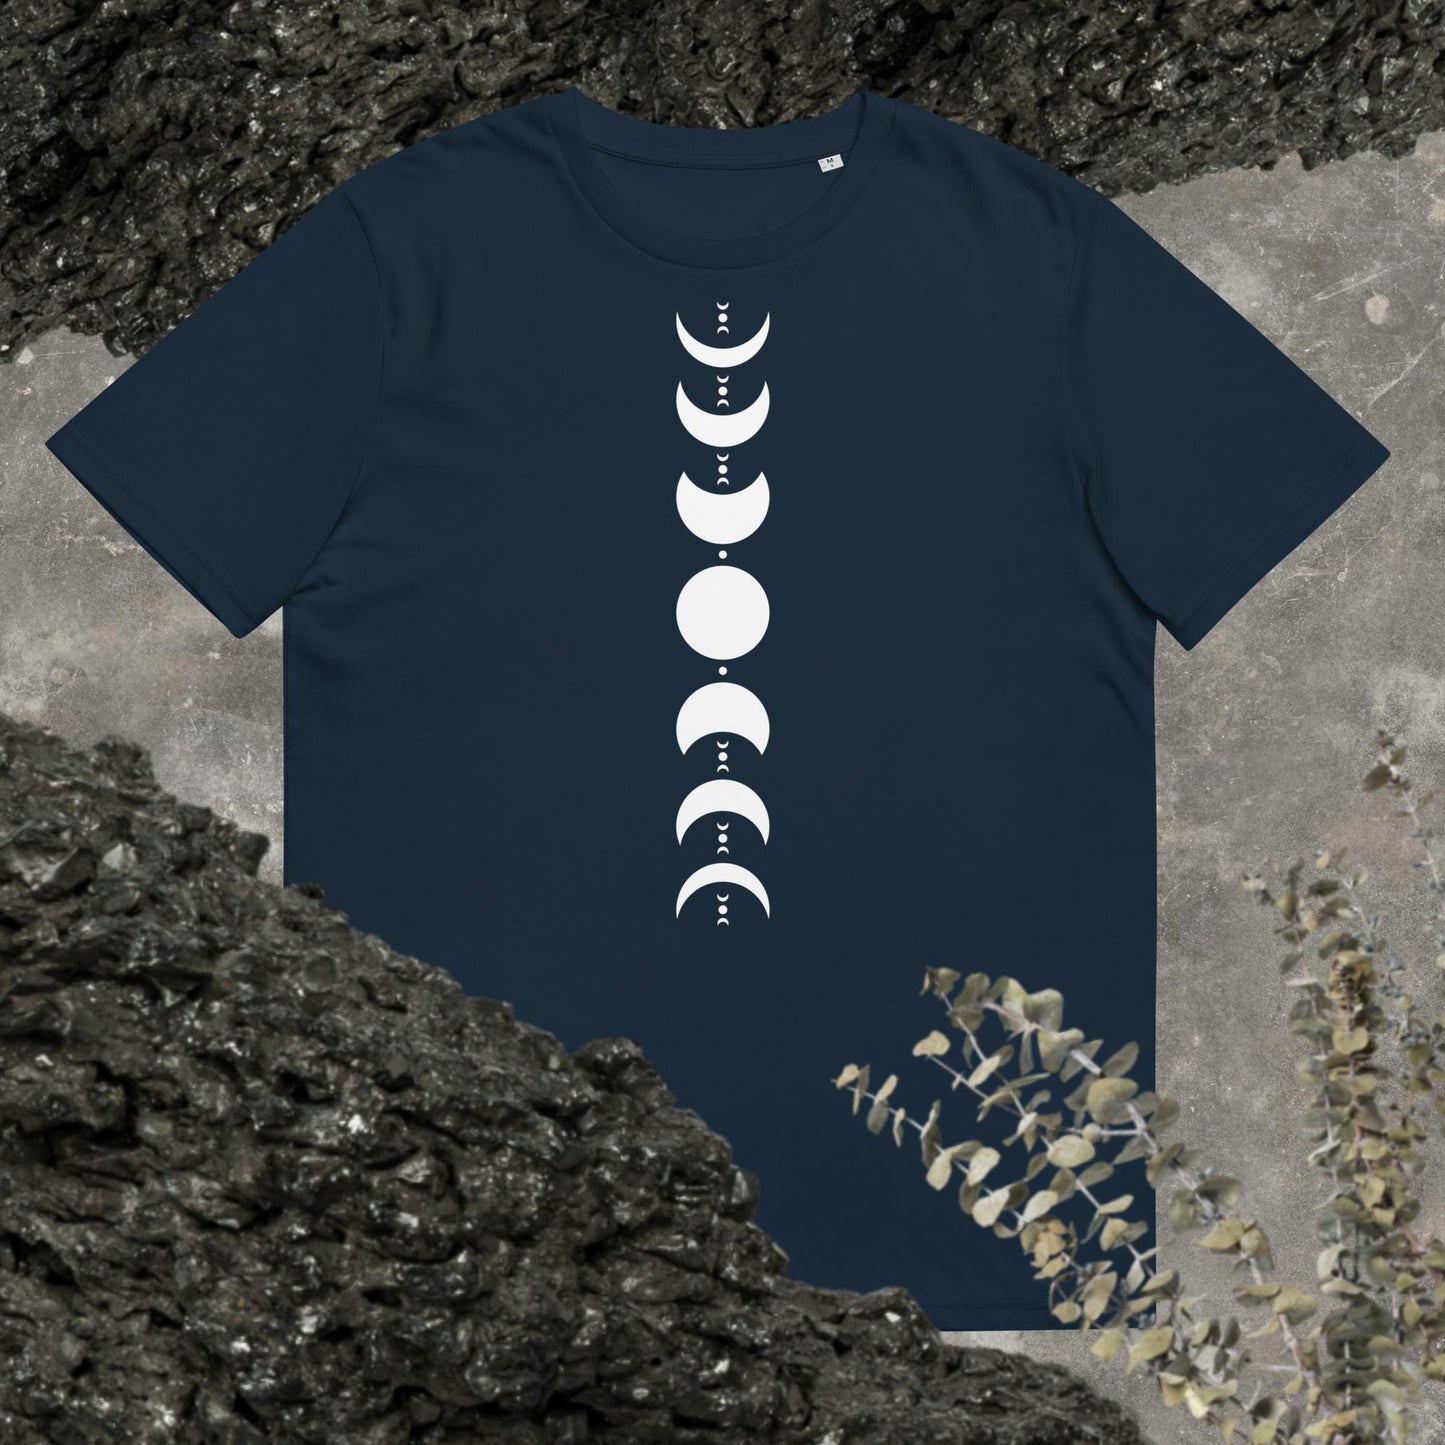 Organic cotton unisex t-shirt: Moon phases, dark color